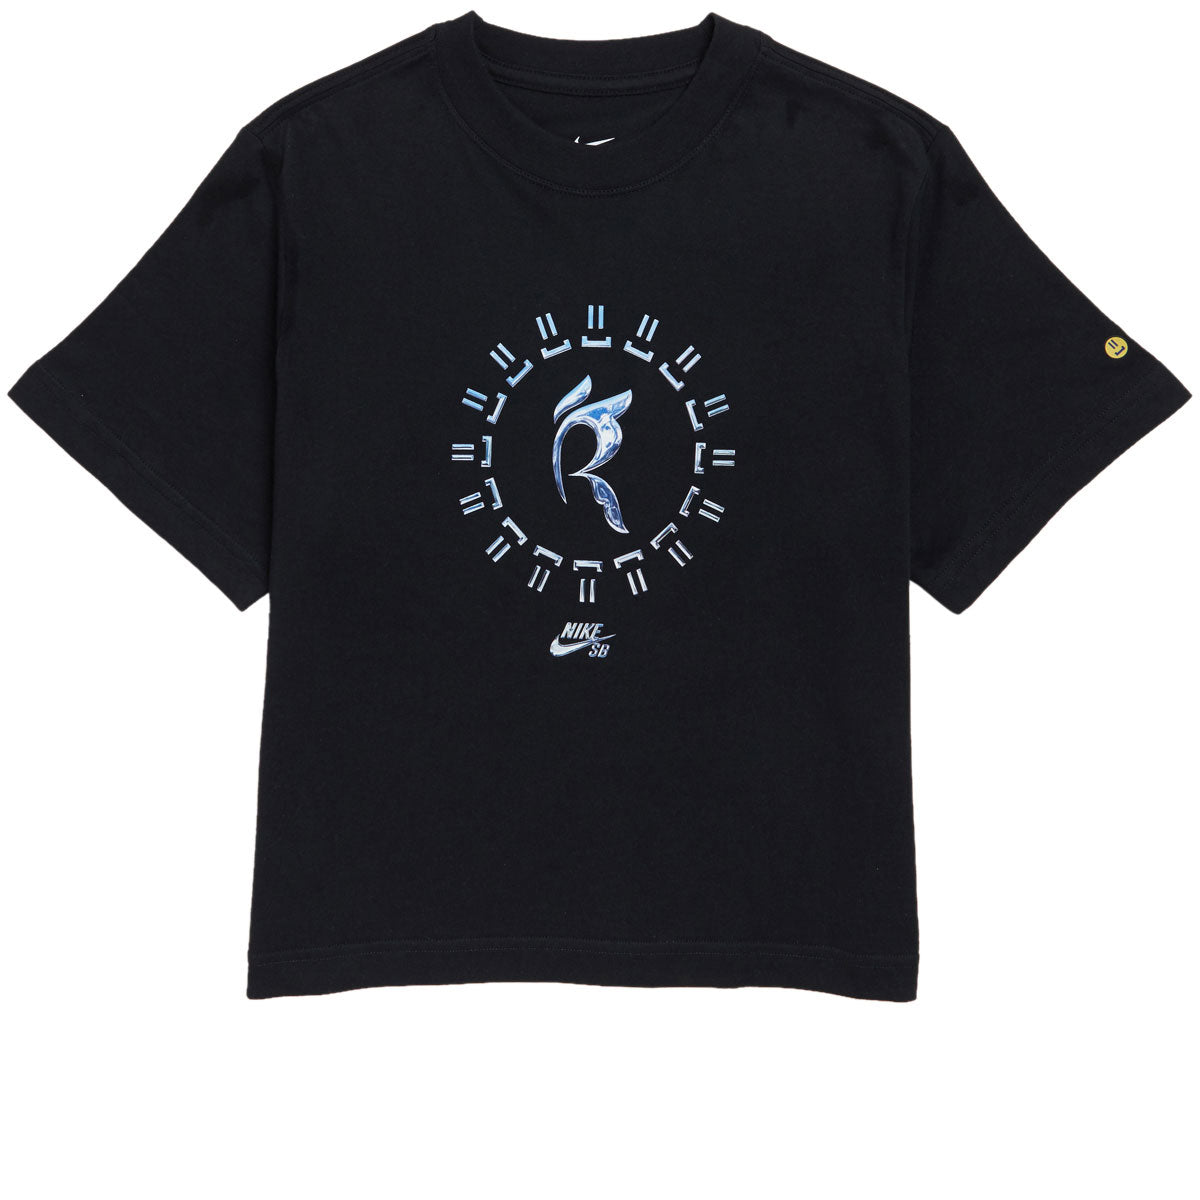 Nike SB Youth x Rayssa Leal T-Shirt - Black image 1